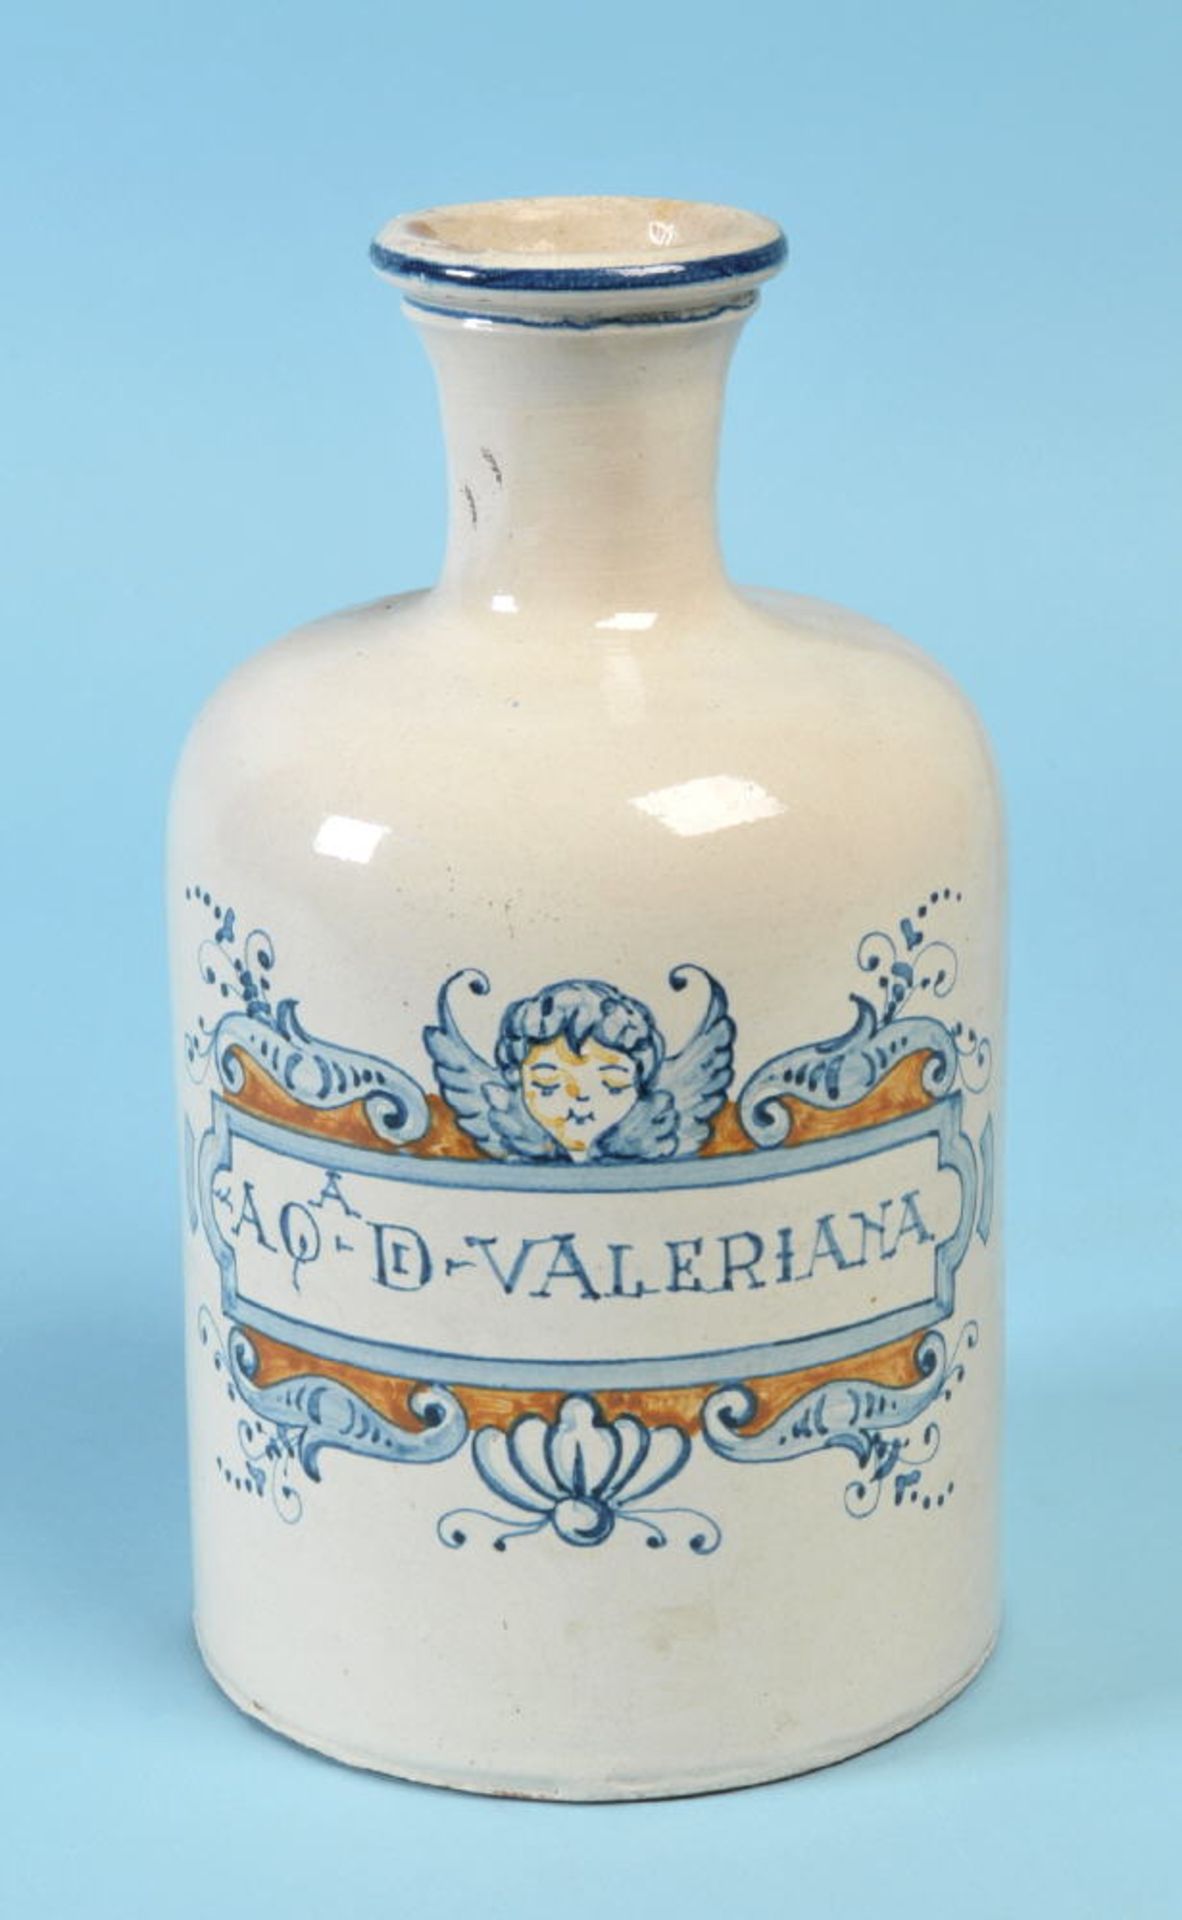 FlascheKeramik, beige Glasur, handbemalt, Ornamentdekor mit Engelskopf u. Beschriftung "Aqa-D-